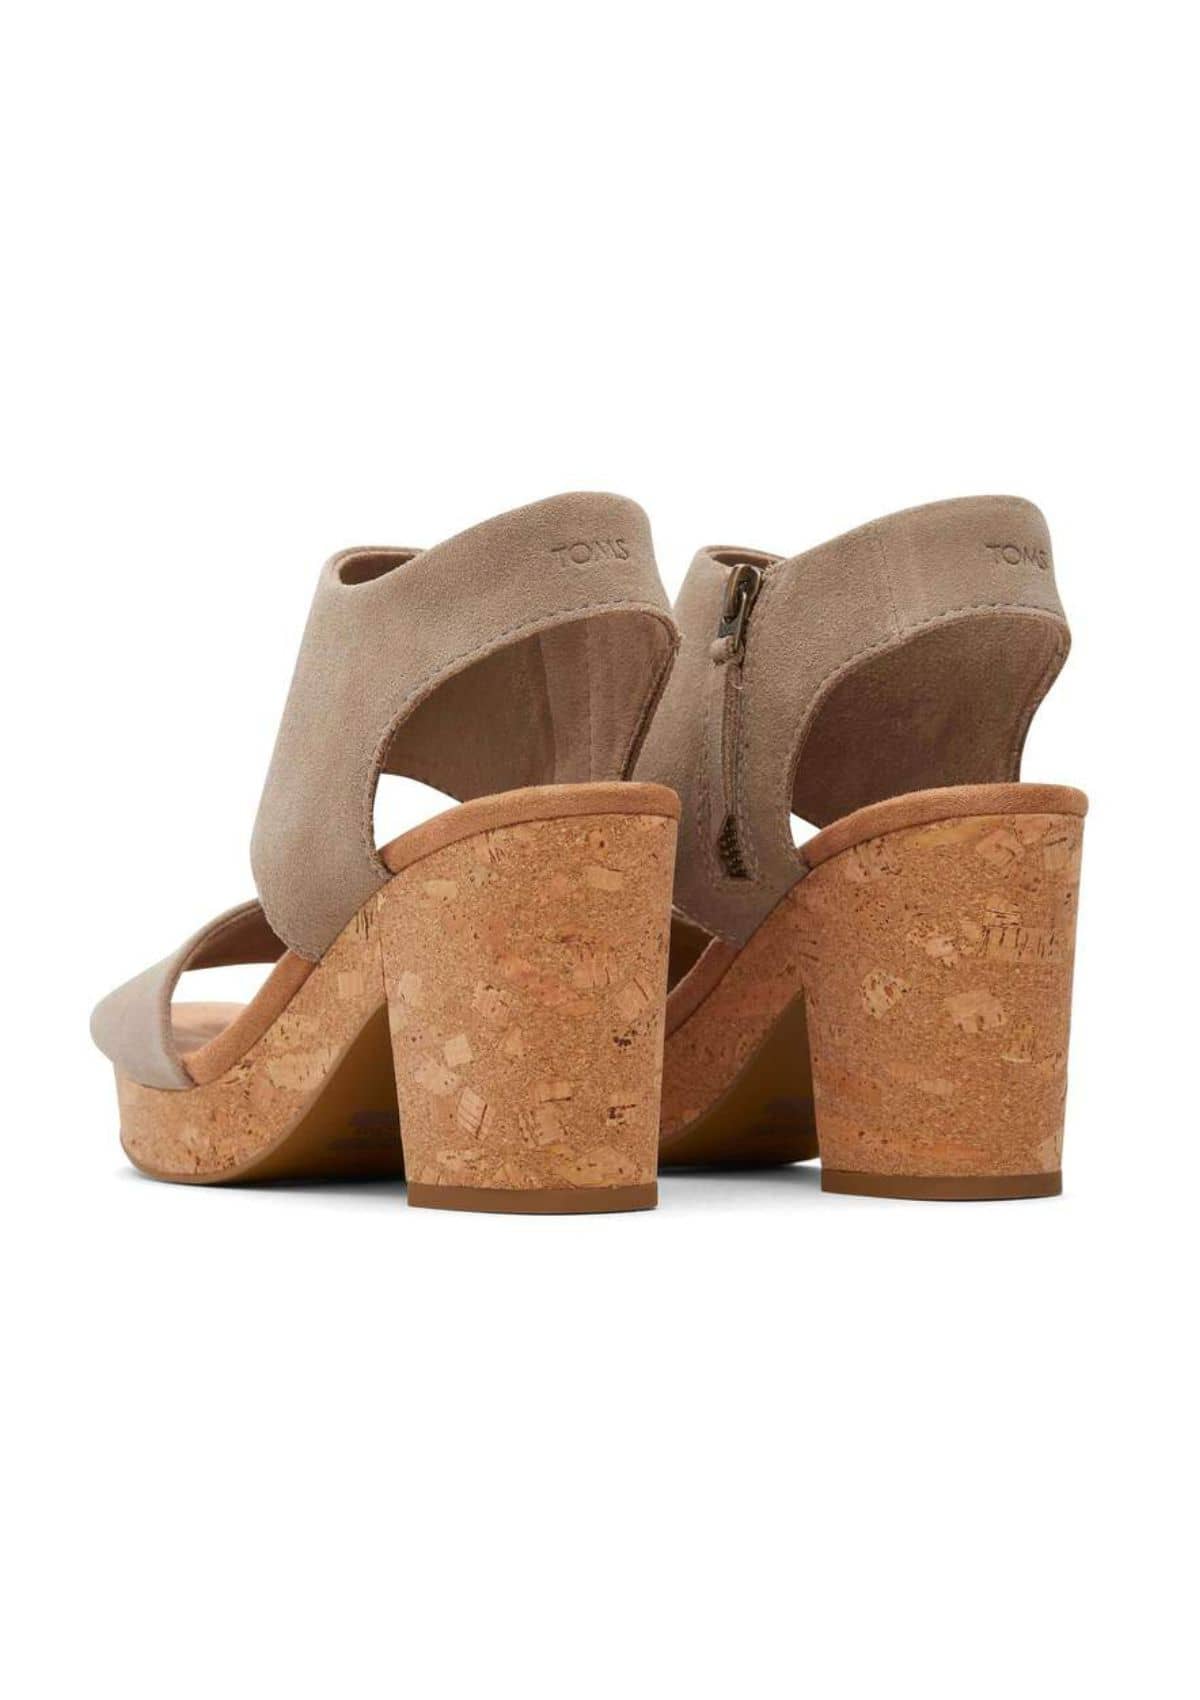 Fashion-Heels-New Shoes-Ruby Jane.